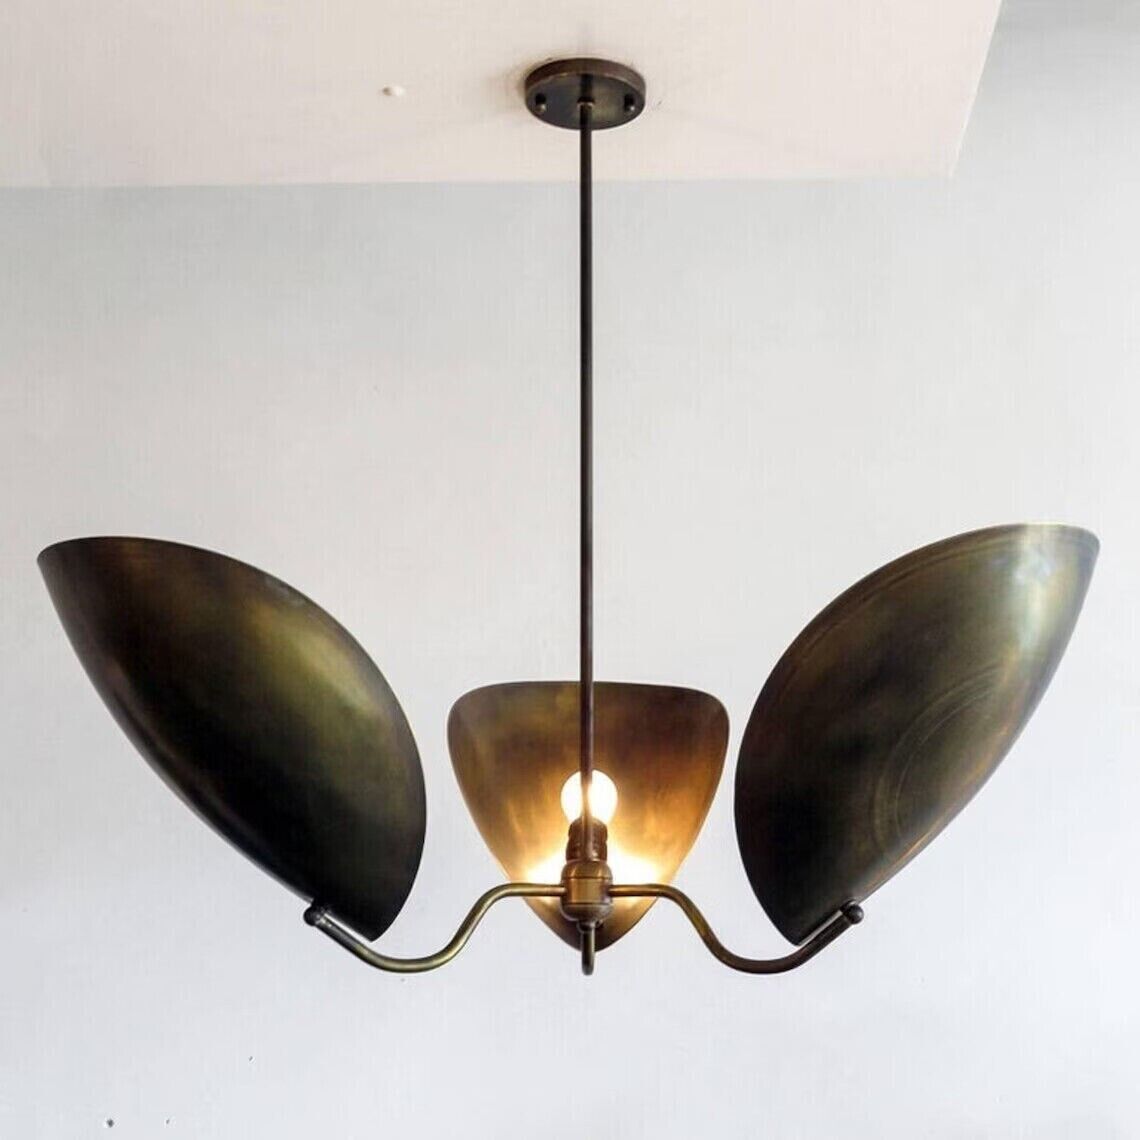 3-Light Mid Century Modern Chandelier with Curved Shades - Handmade Vintage Raw Brass